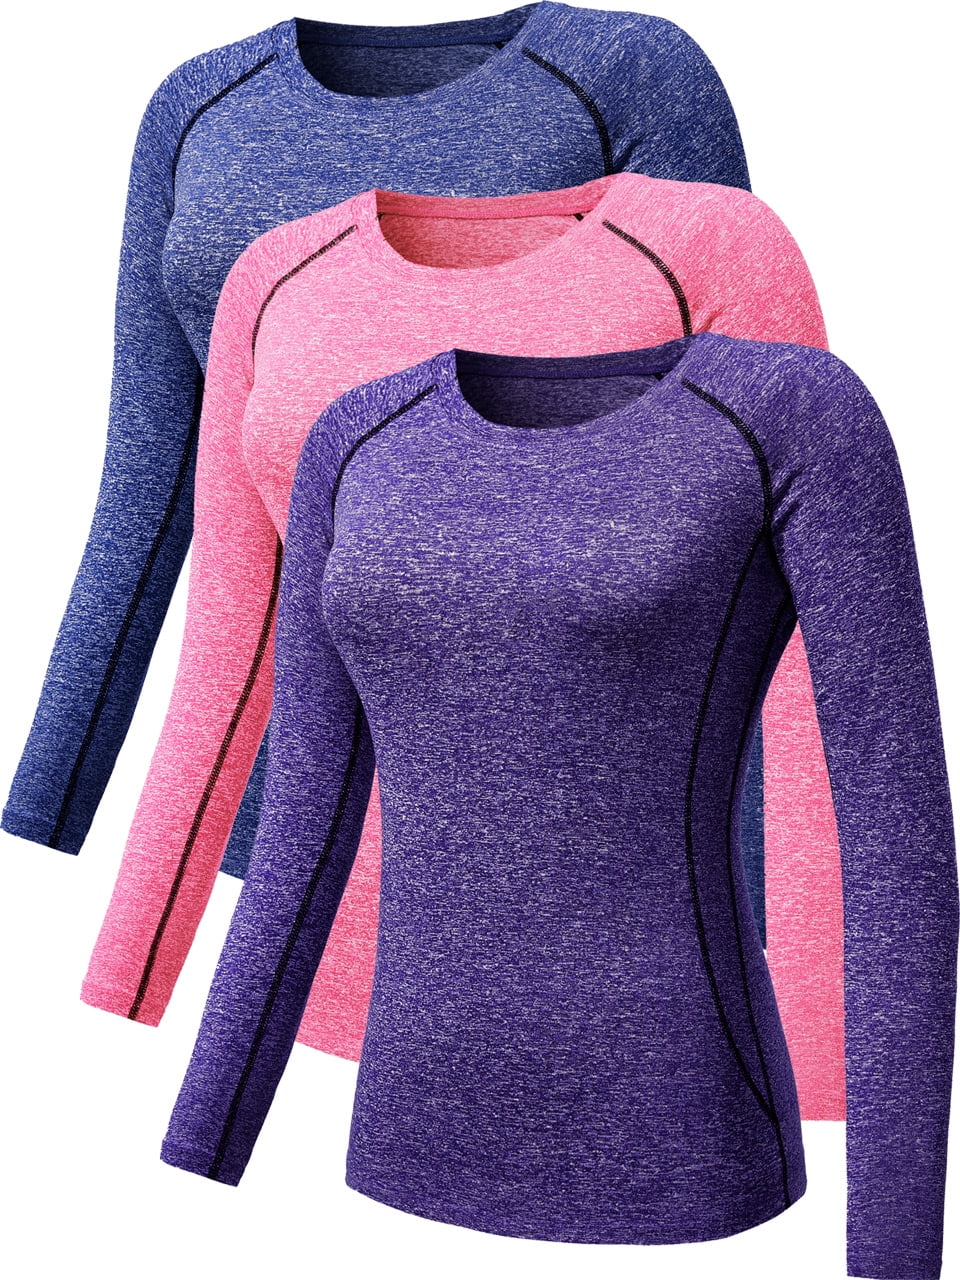 Tees, Women's Gym T-Shirts, Yoga T-Shirts, Varley US